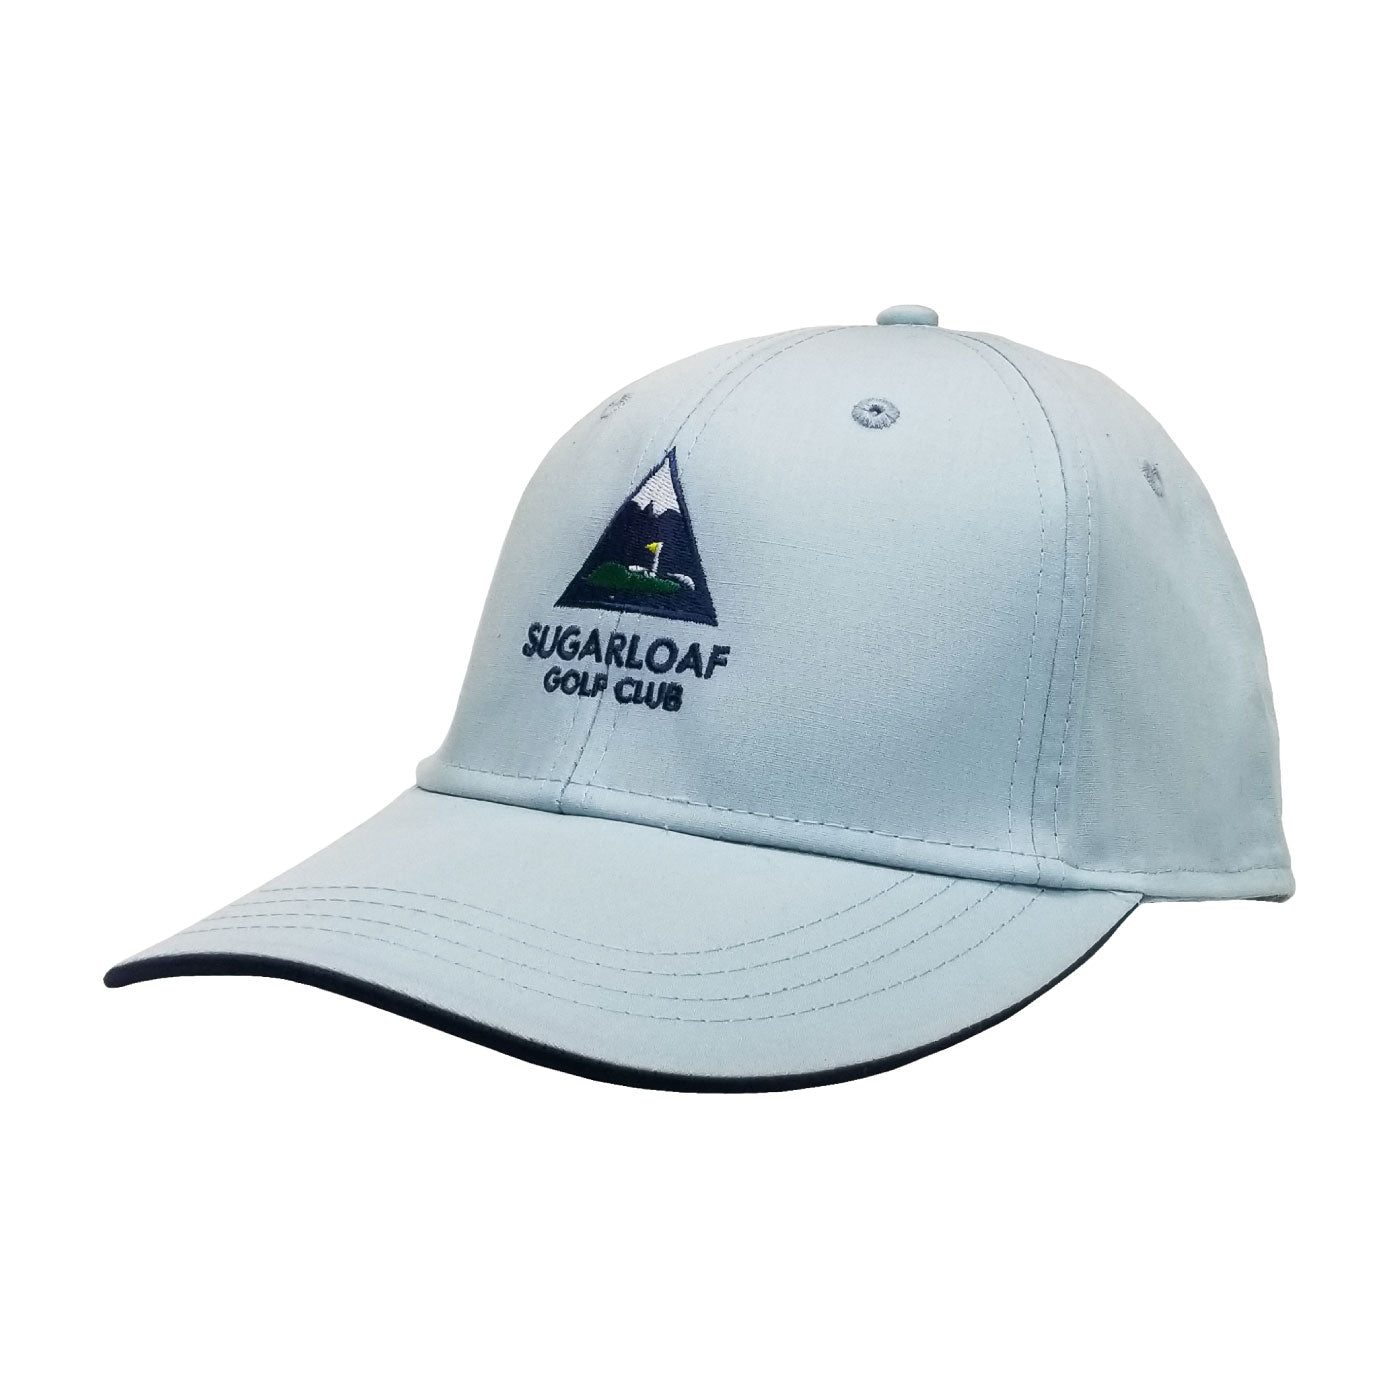 Sugarloaf Golf Club The Ellipse Core Logo Hat PERIWINKLE/NAVY